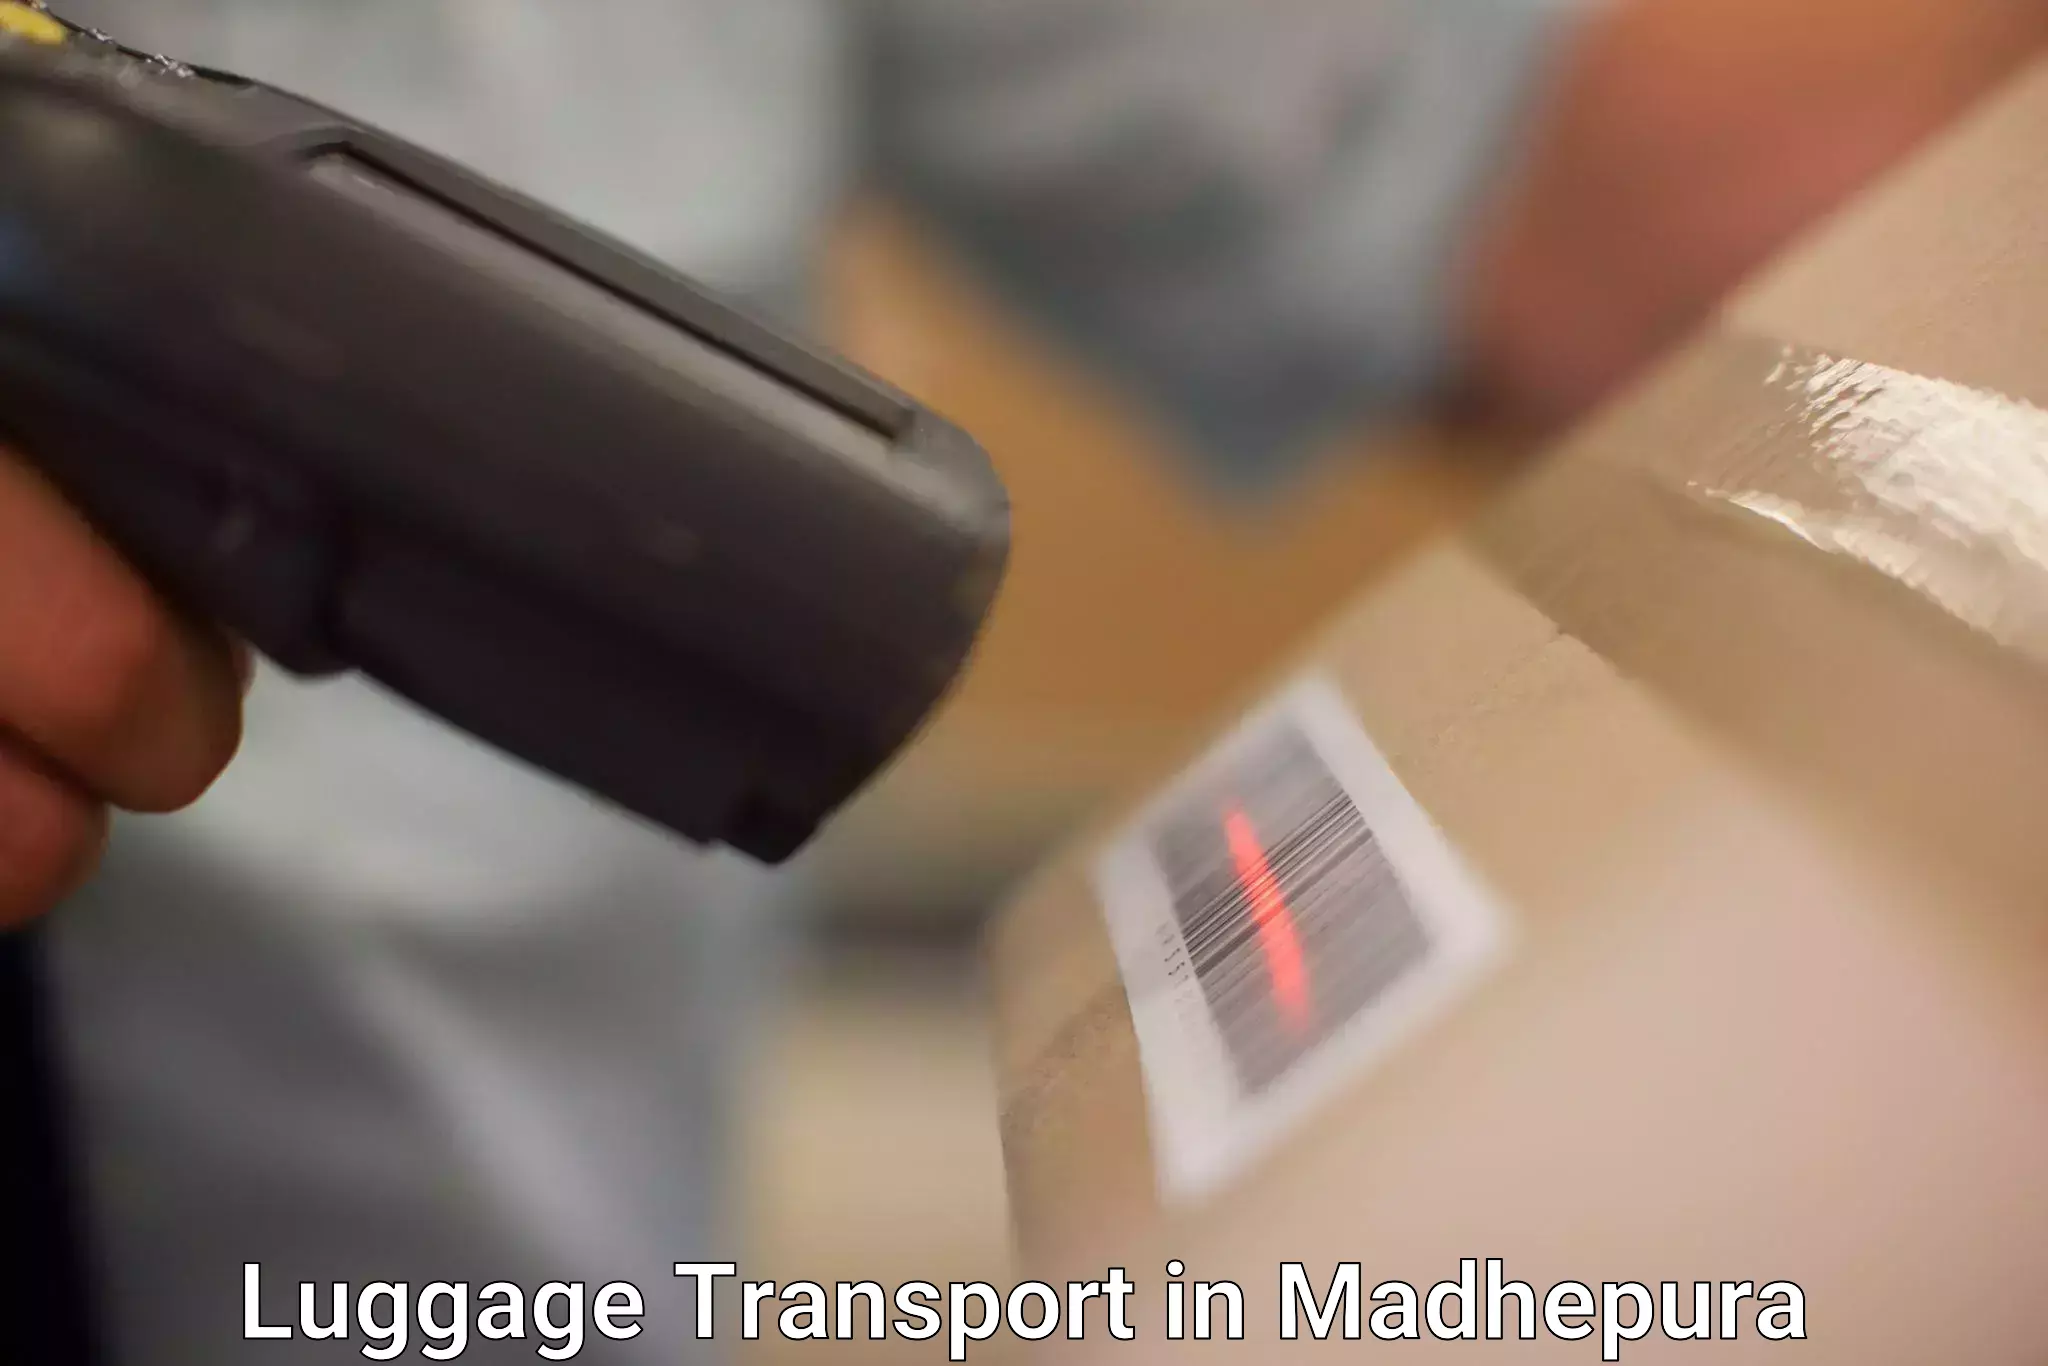 Professional baggage transport in Madhepura